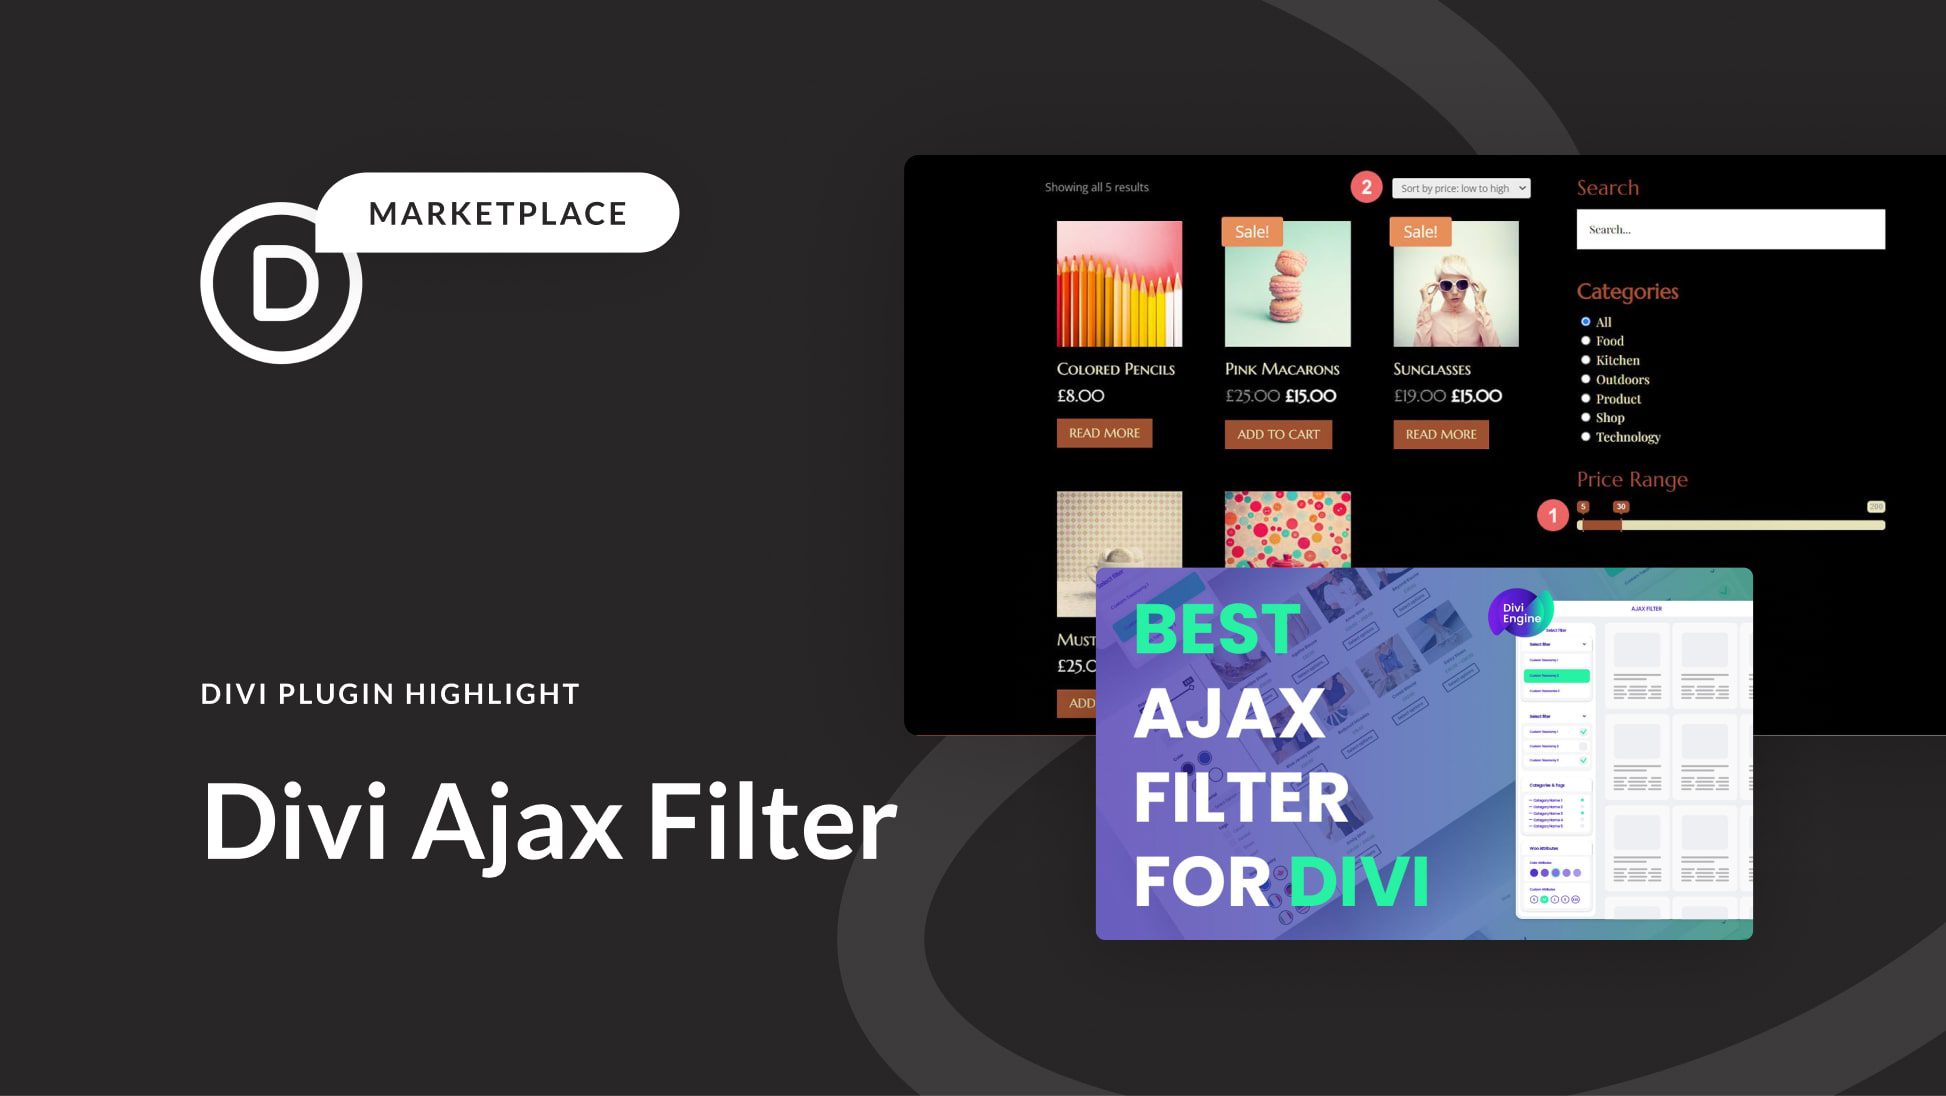 Divi Plugin Highlight: Divi Ajax Filter